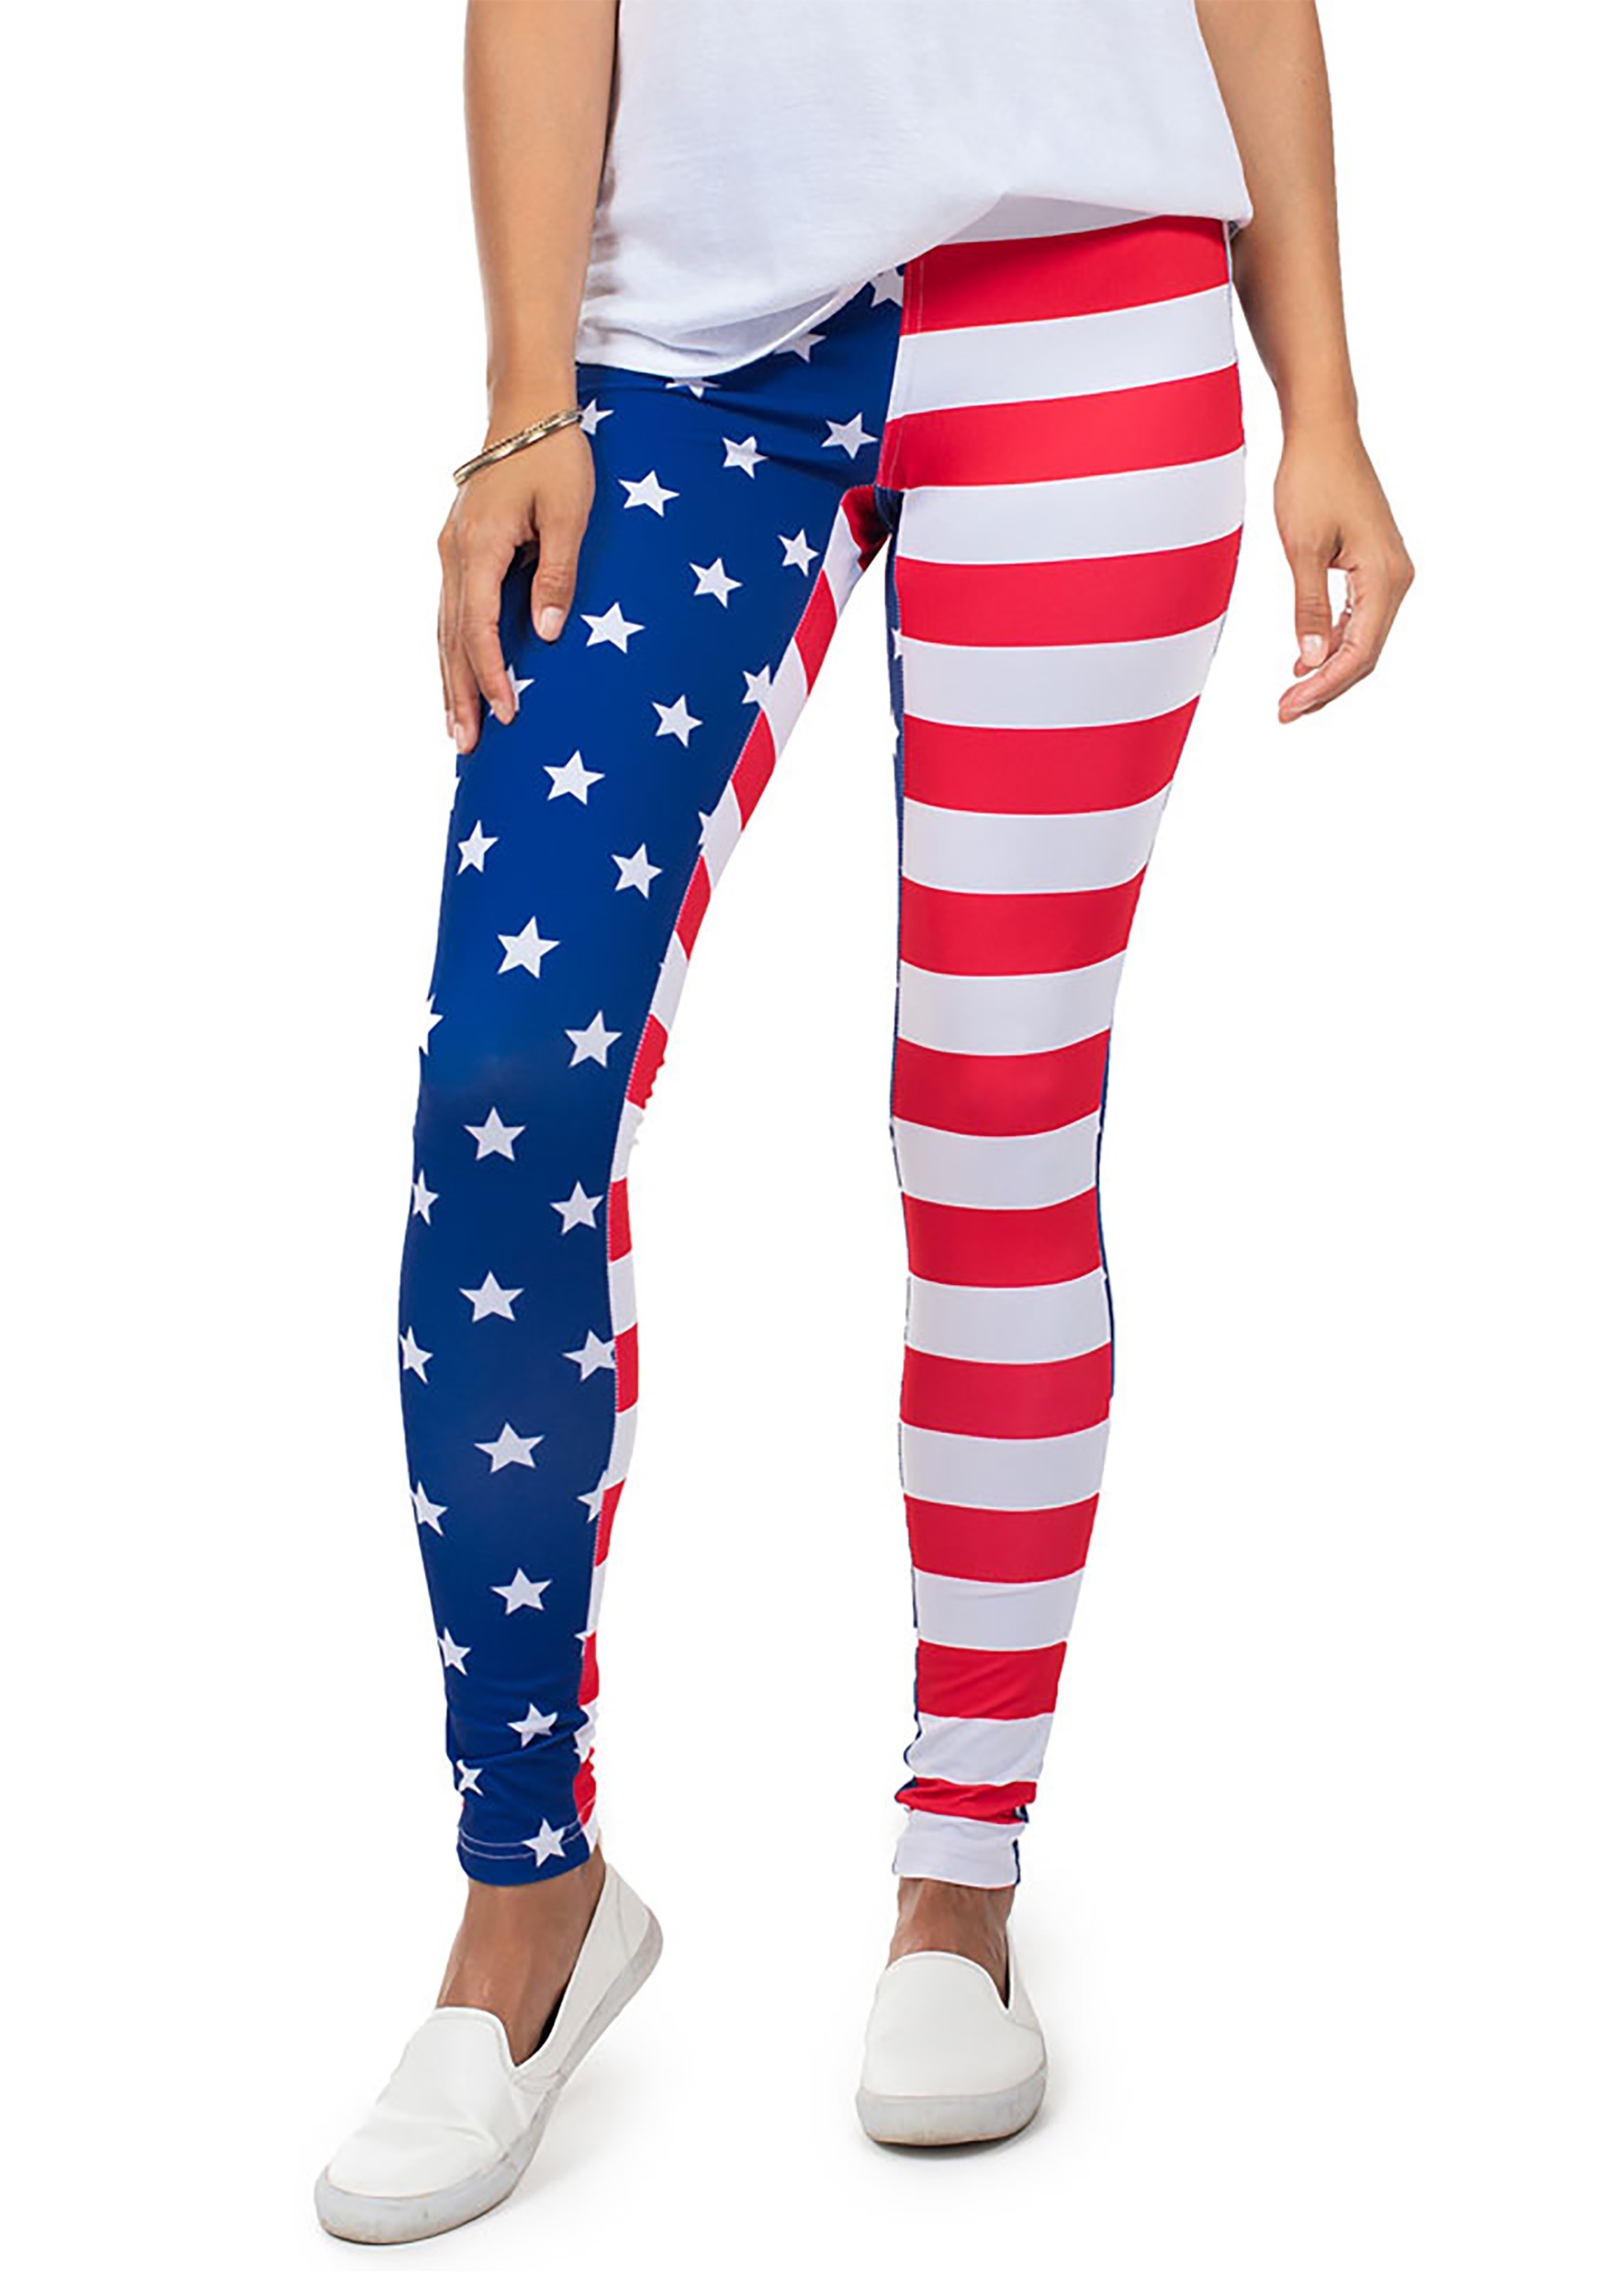 https://images.halloweencostumes.com/products/55138/1-1/tipsy-elves-womens-american-flag-leggings.jpg